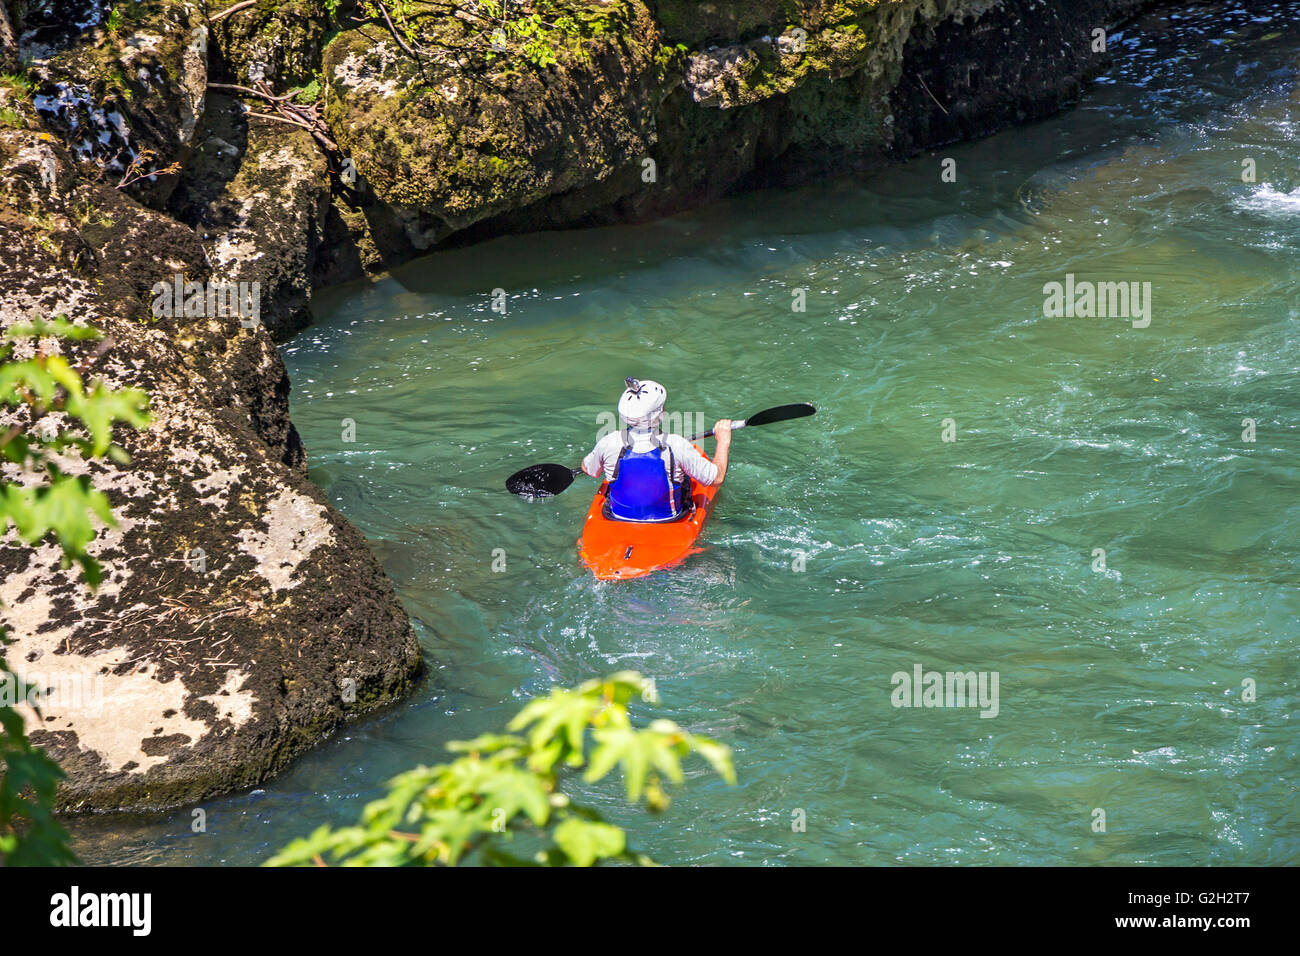 Kayaking in white water, blurred motion Stock Photo